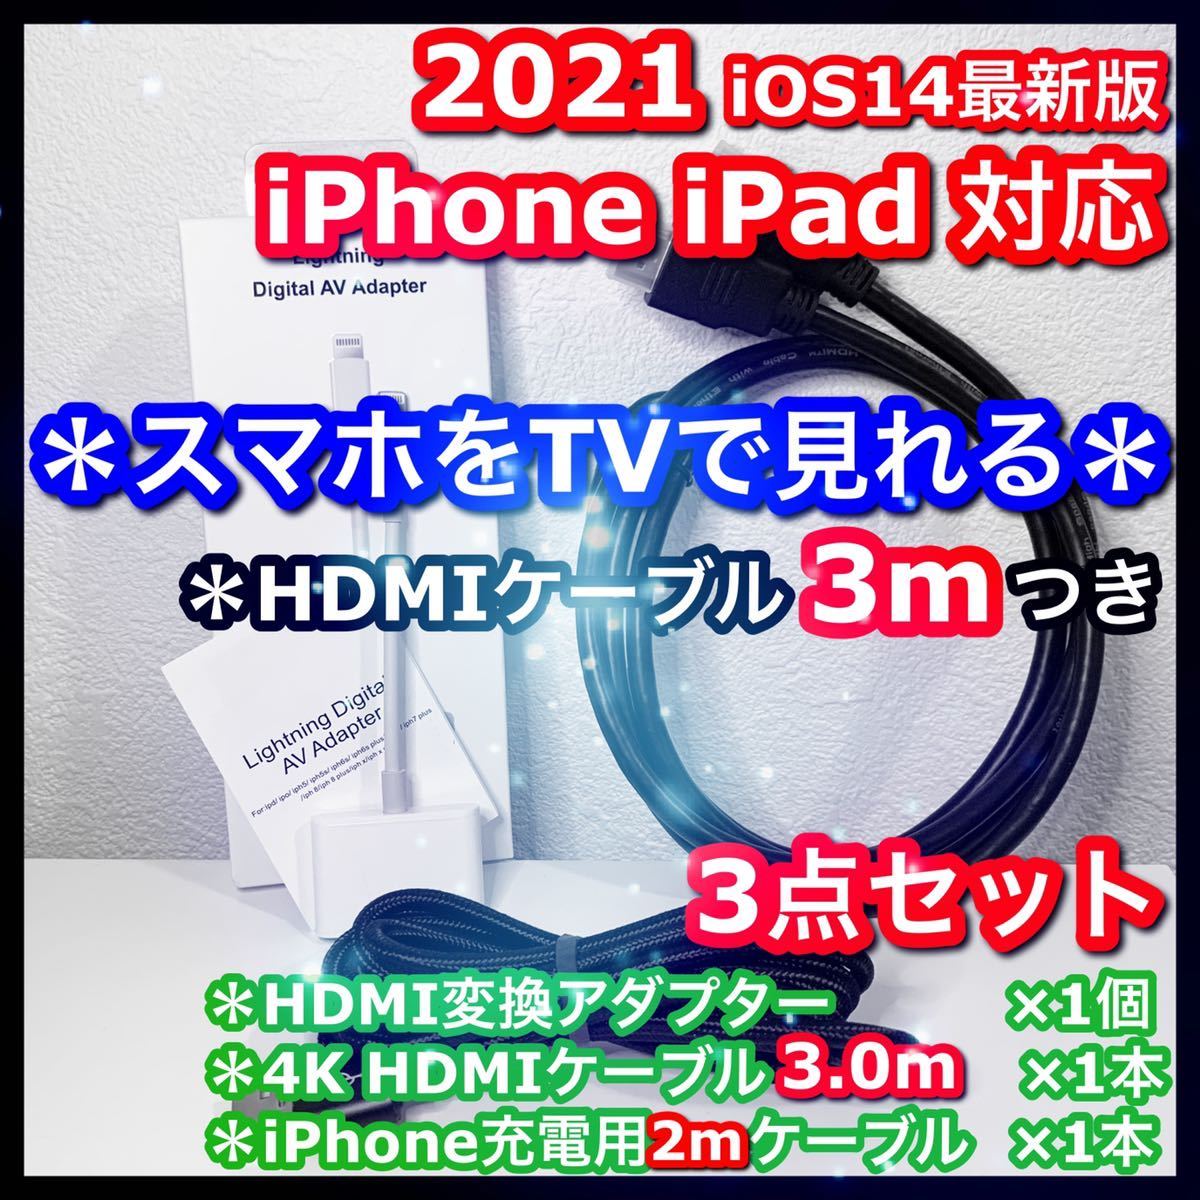 3.0m 3点セット iphone HDMI digital av 変換 アダプタ ケーブル ライトニング テレビ接続 スマホ iPad 動画 配信 ライブ アーティスト_画像1